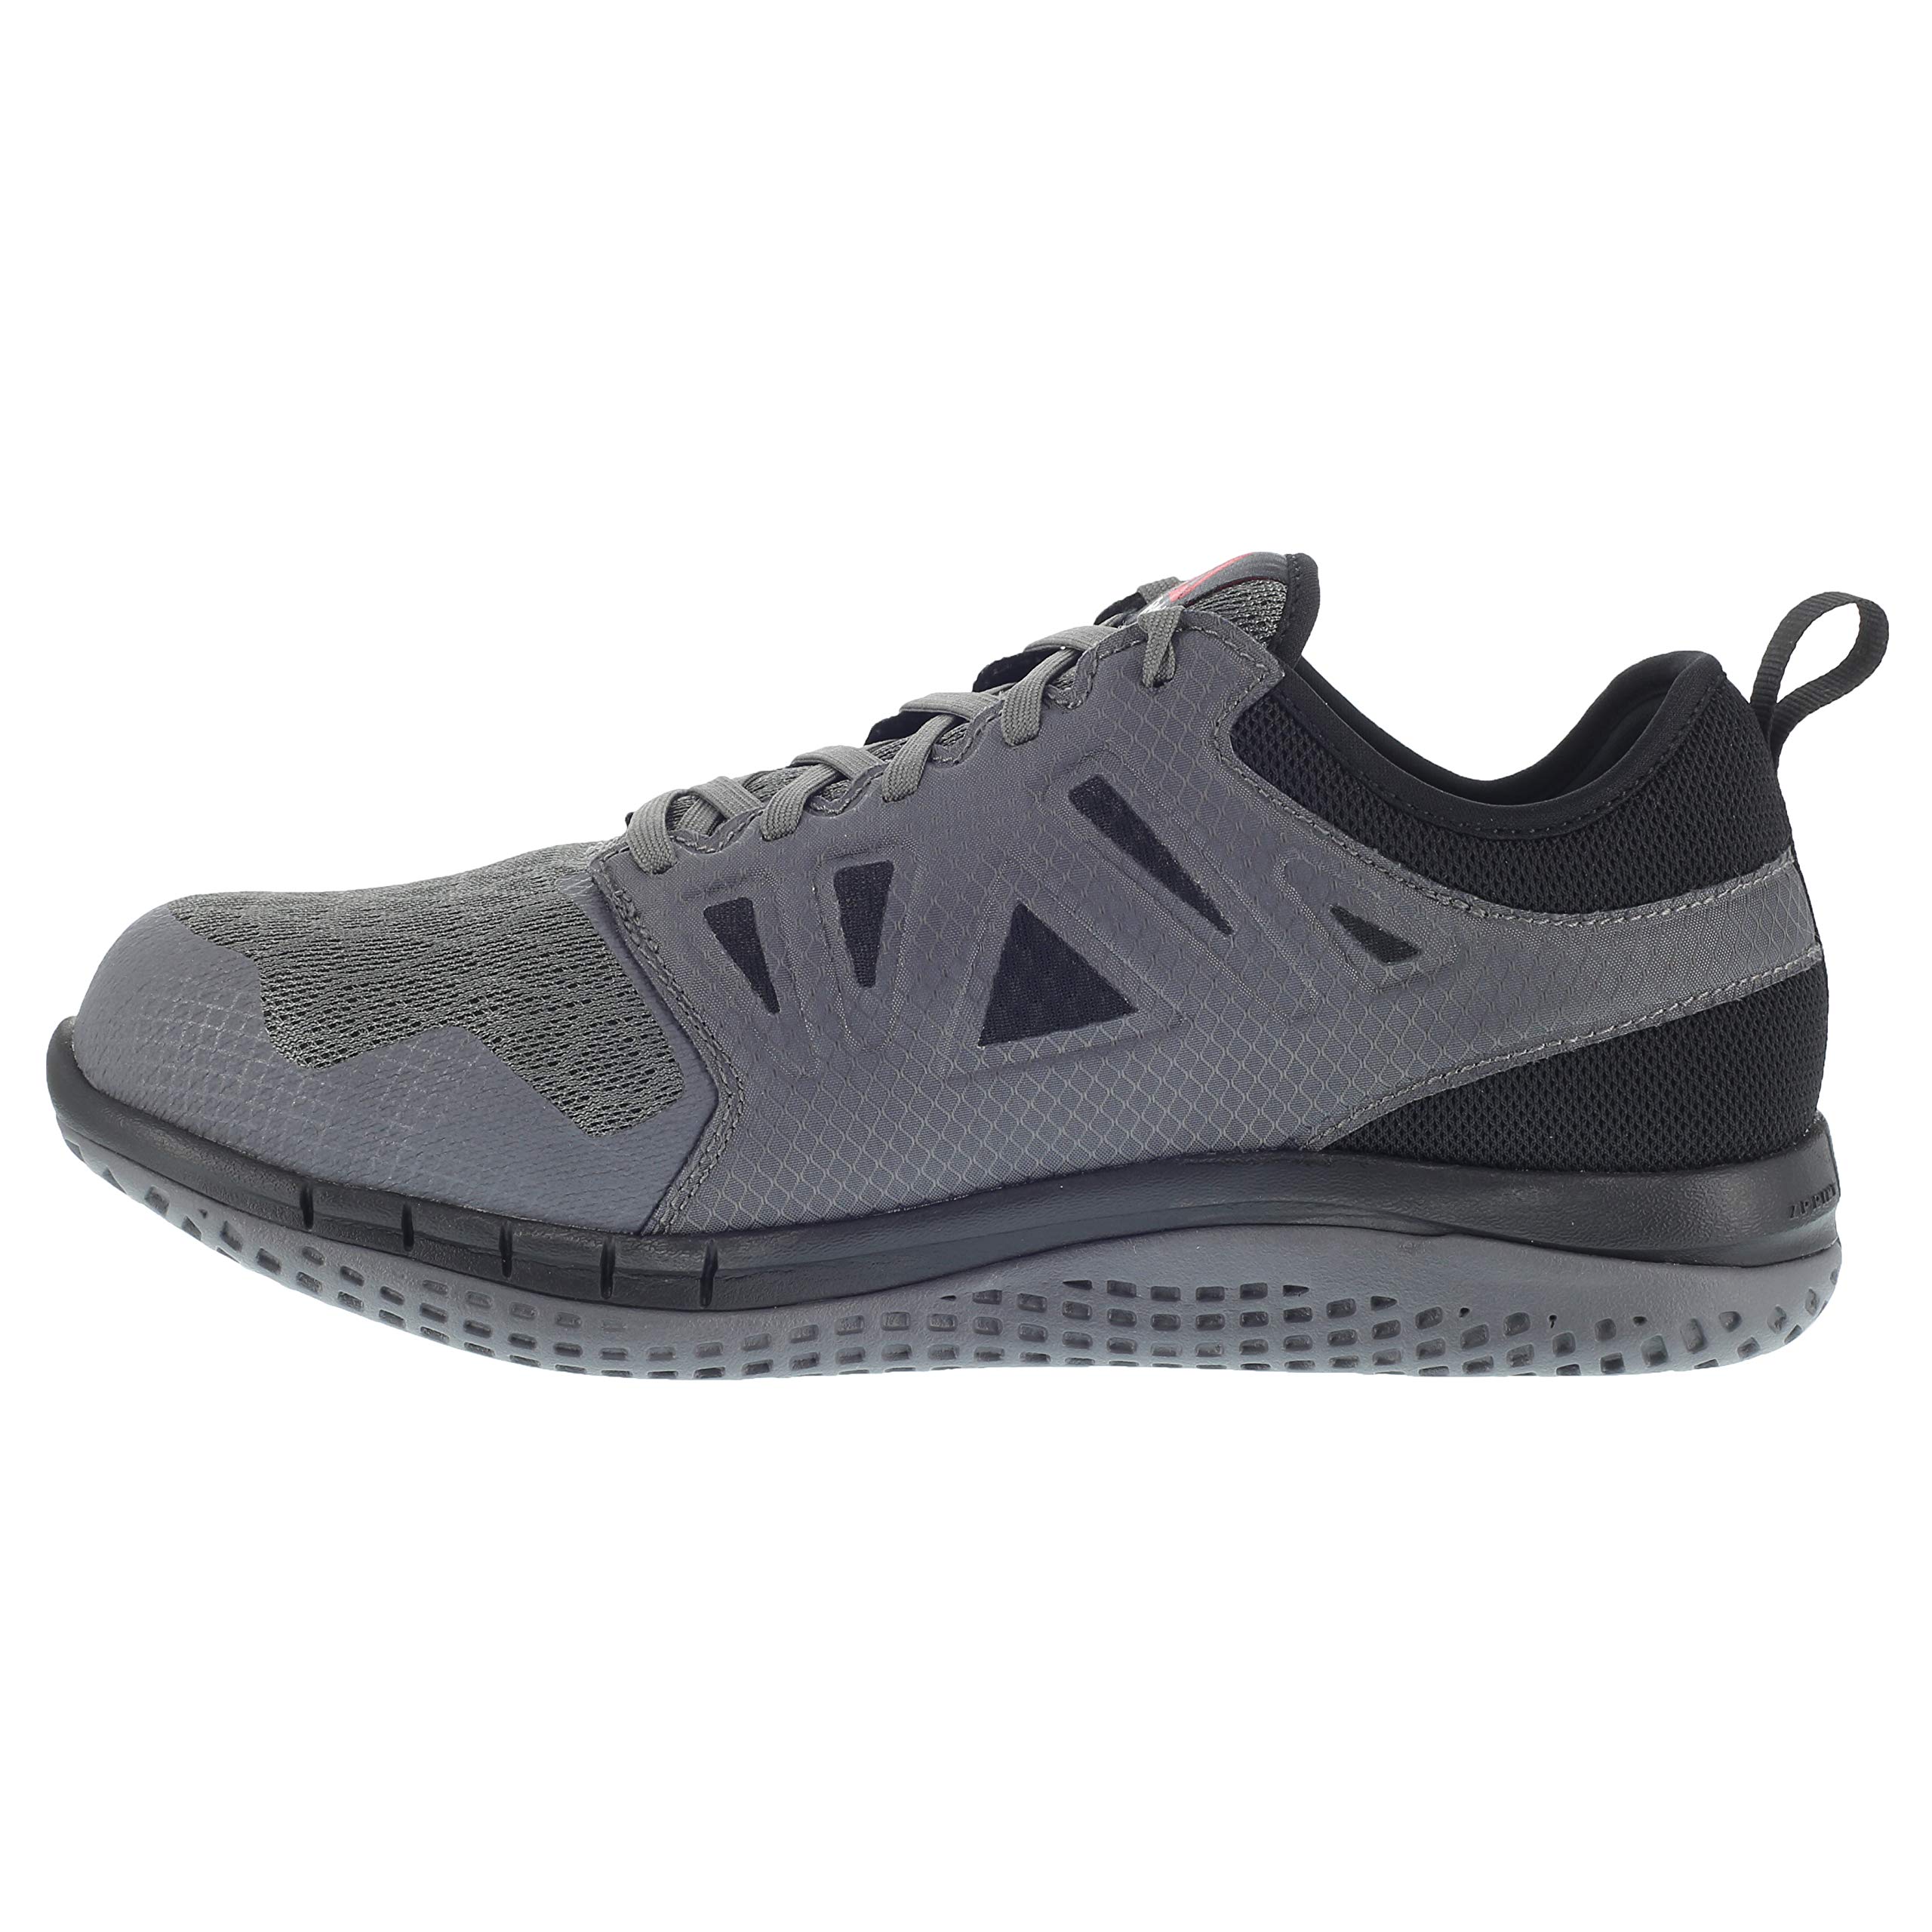 Reebok mens Zprint Work Safety Toe Athletic Work Industrial Construction Shoe, Dark Grey, 10.5 US